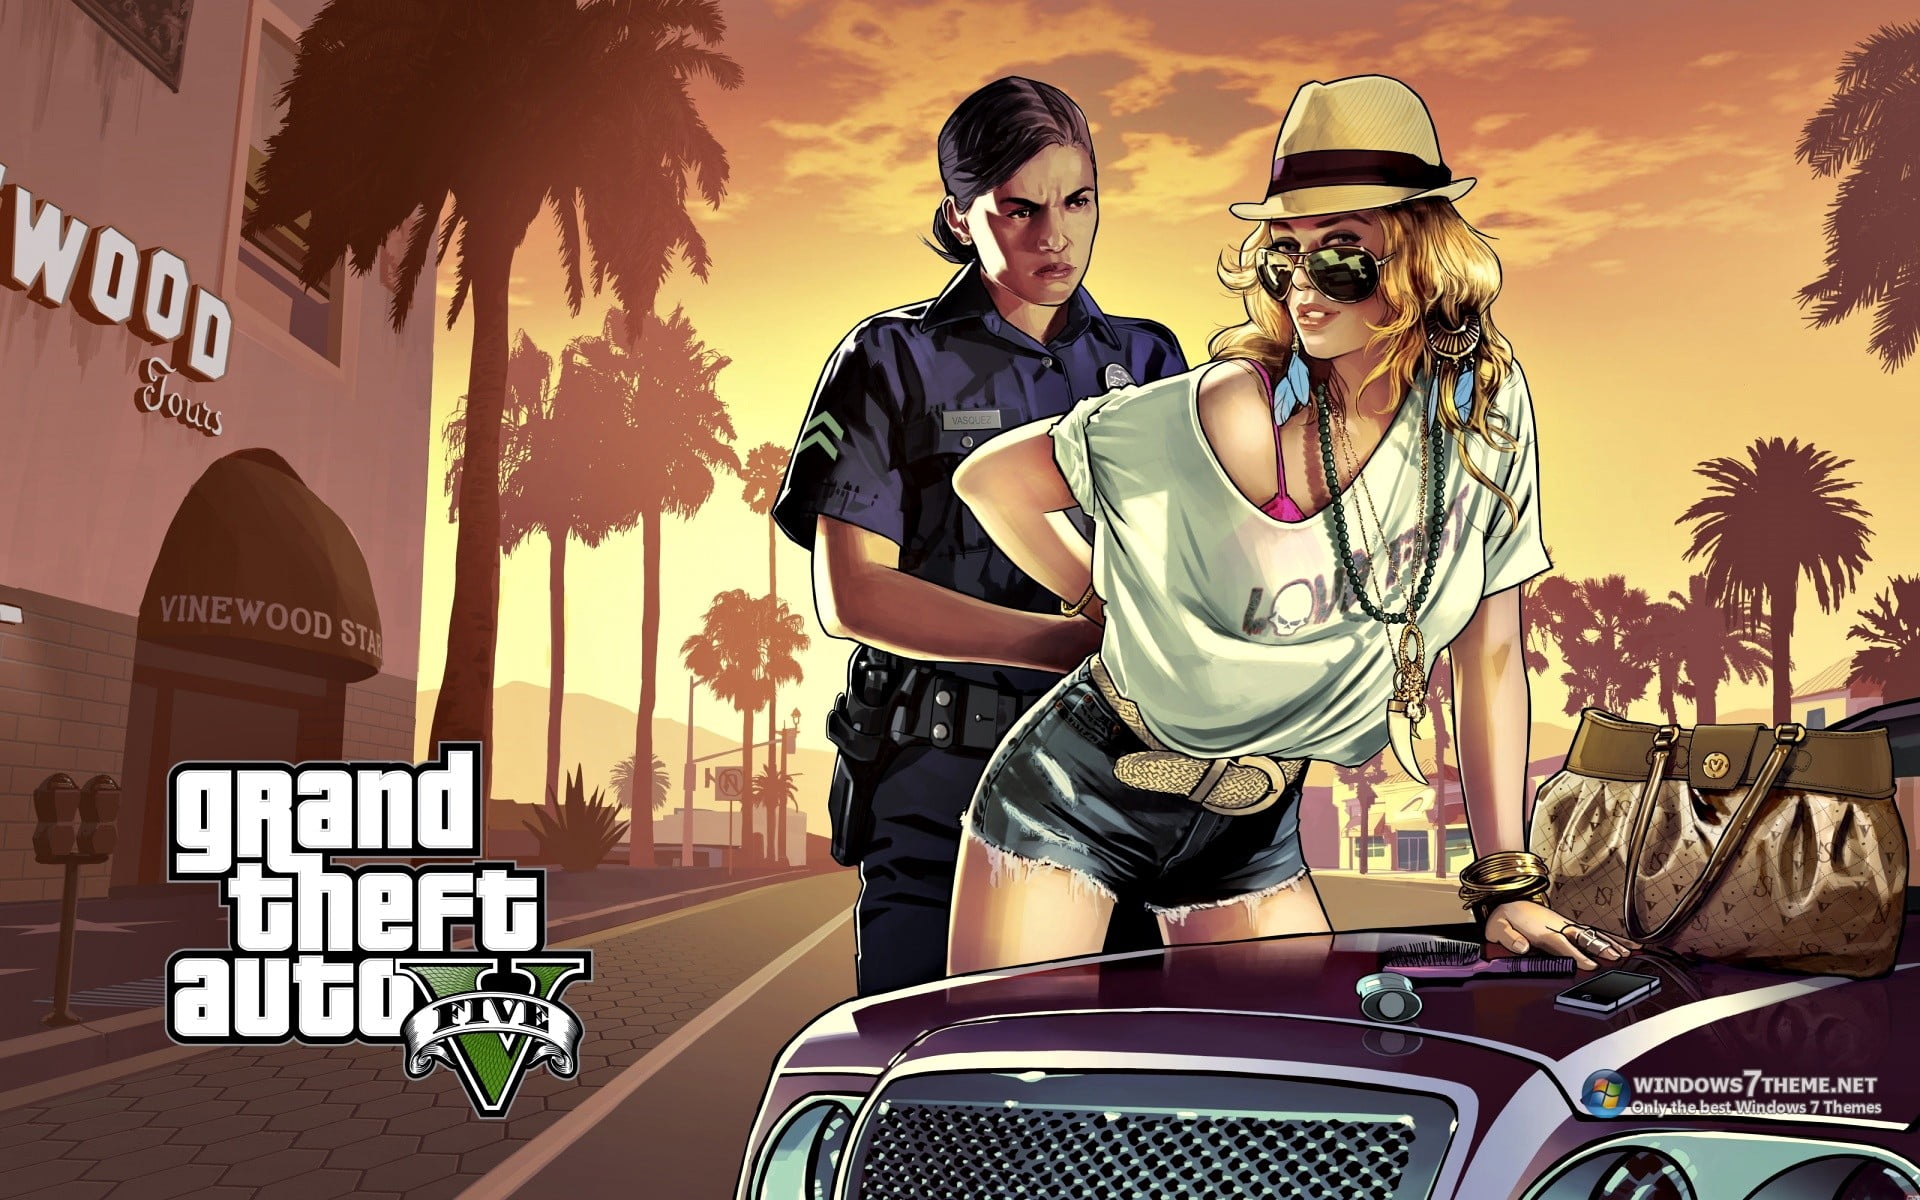 Grand Theft Auto wallpaper, Grand Theft Auto V, men, women, people